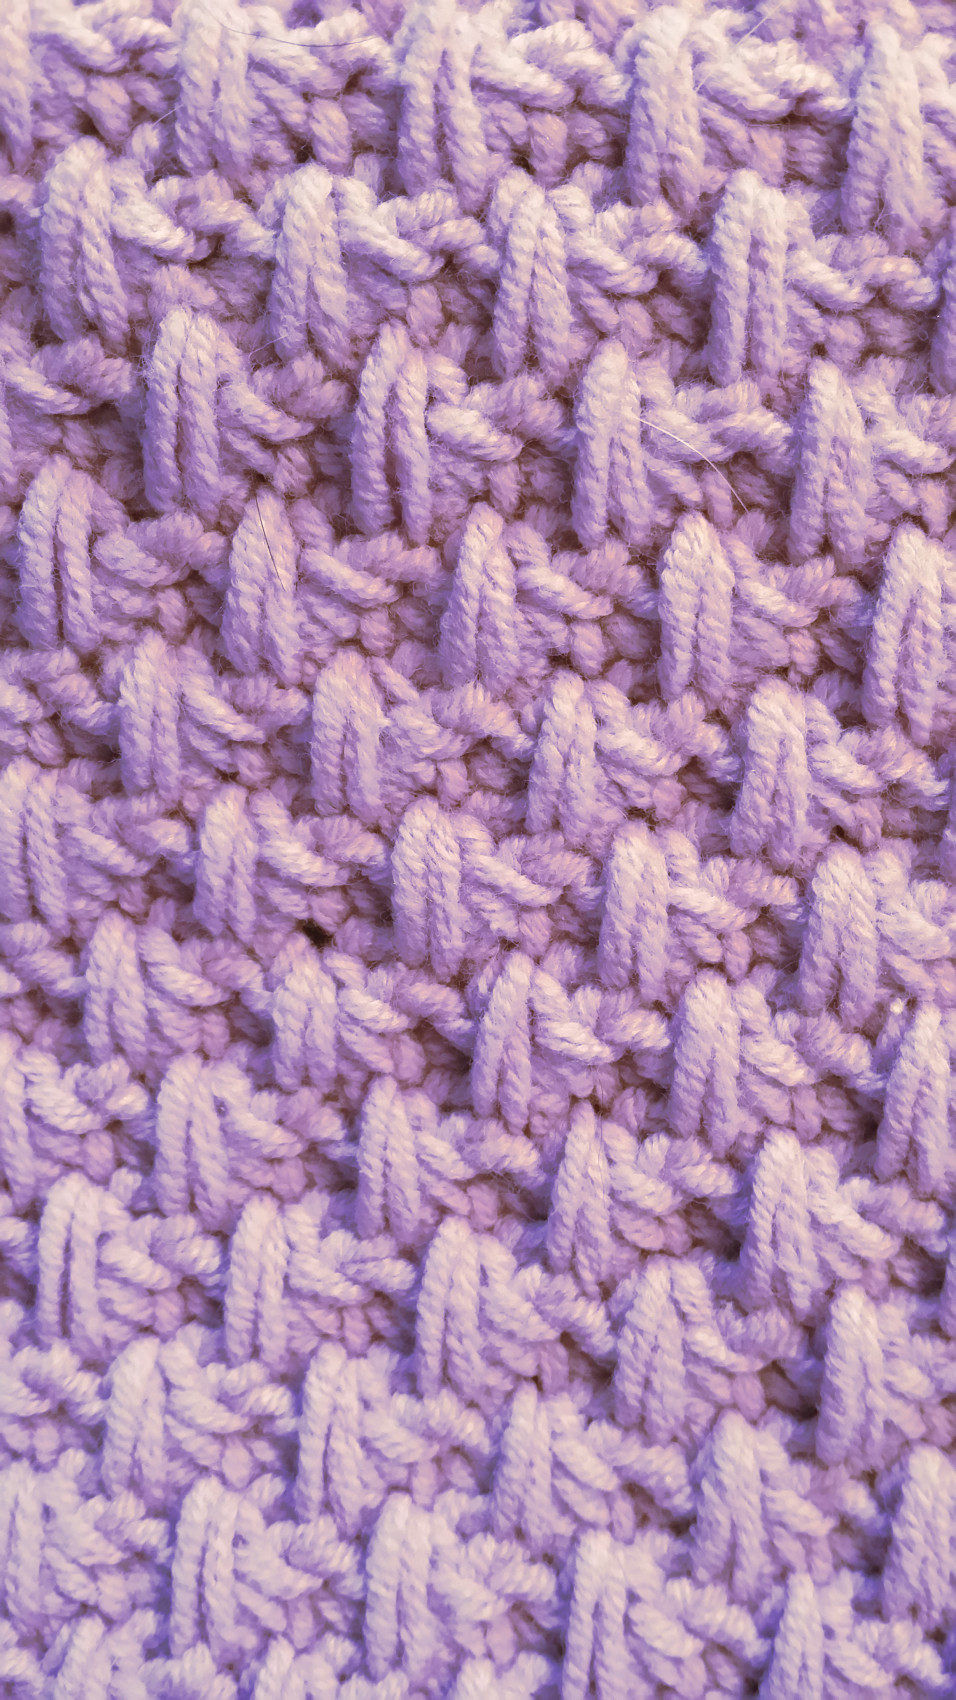 elongated single crochet, copyrighted image